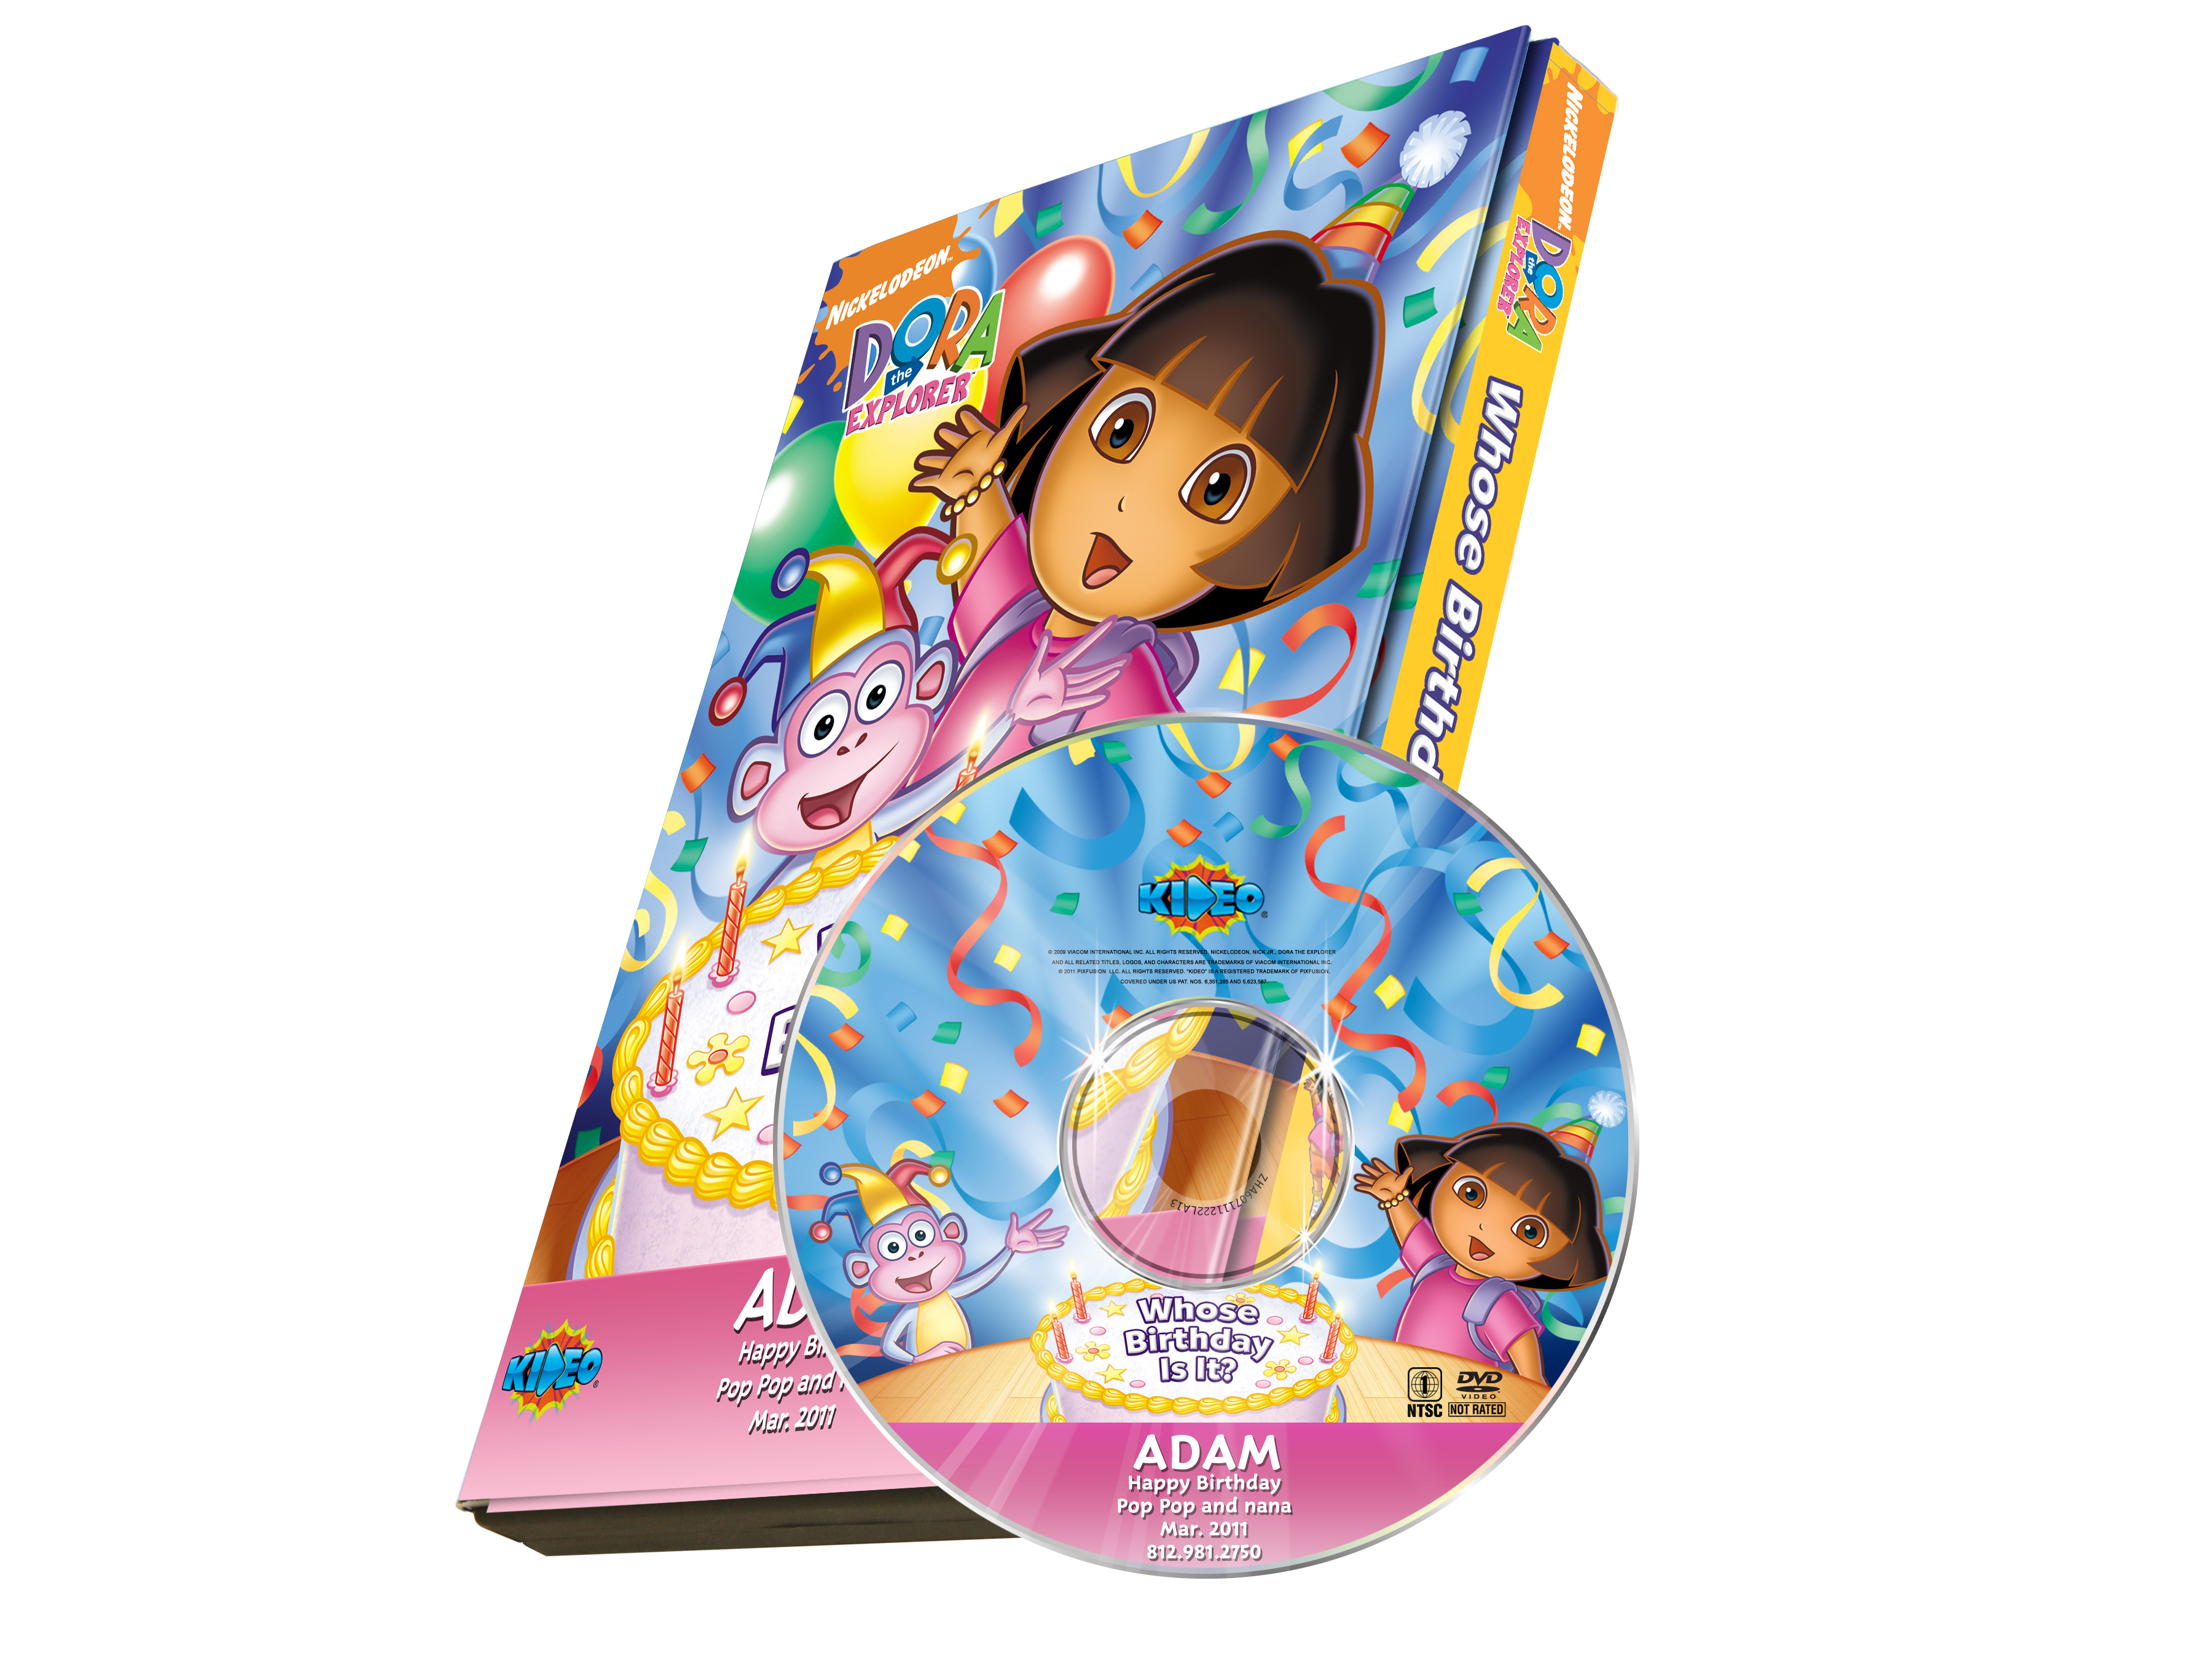 Dora the Explorer: Whose Birthday Is It?